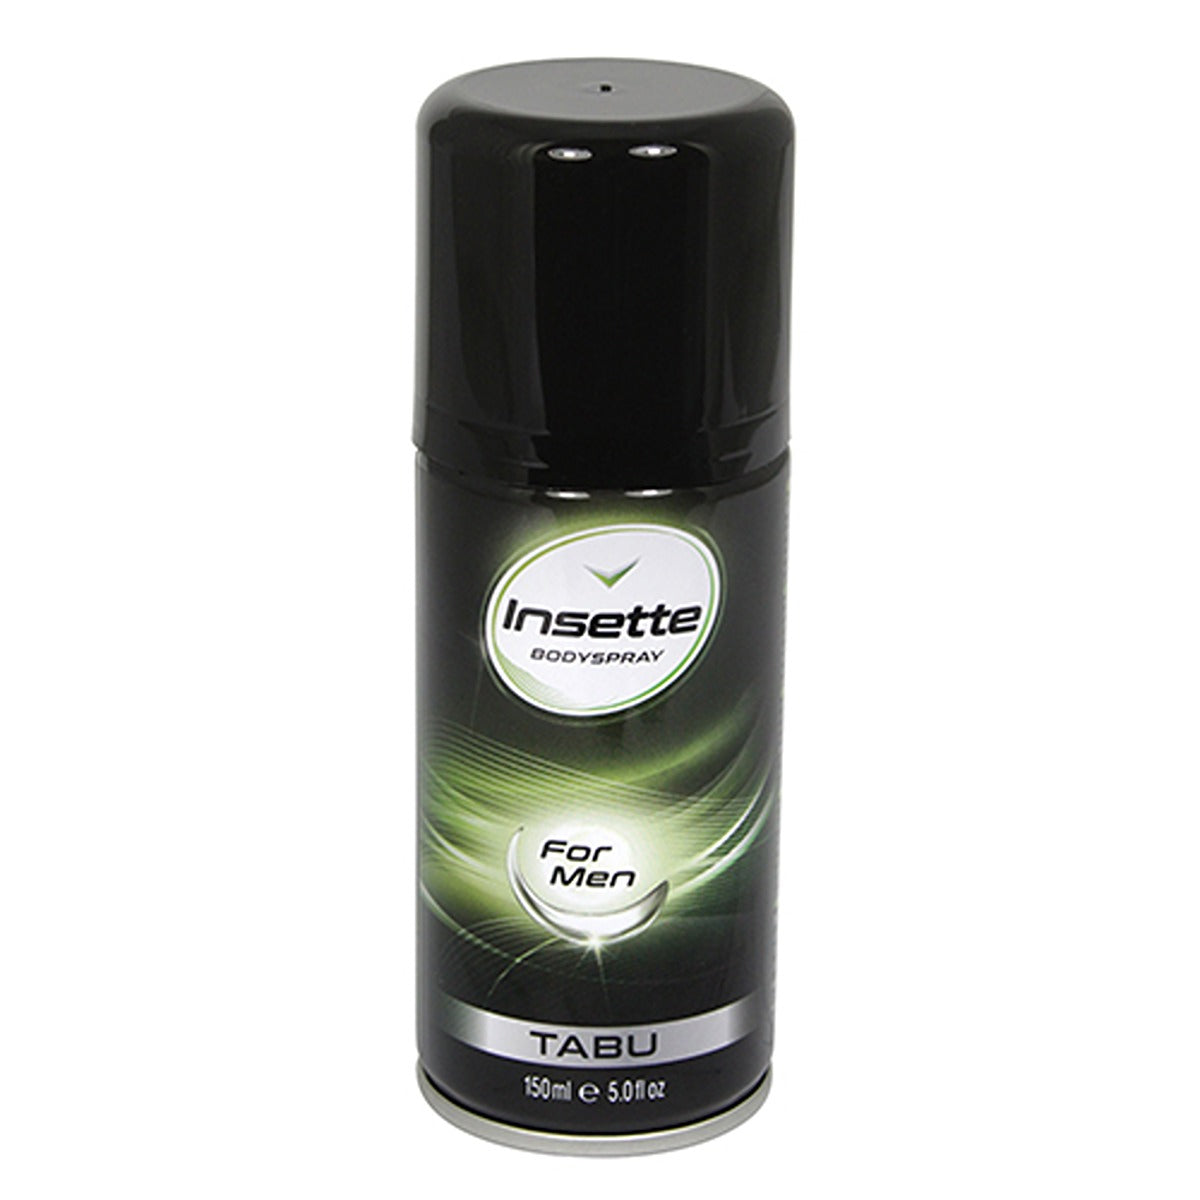 Insette - Men's Deodorant Body Spray Tabu - 150ml - Continental Food Store